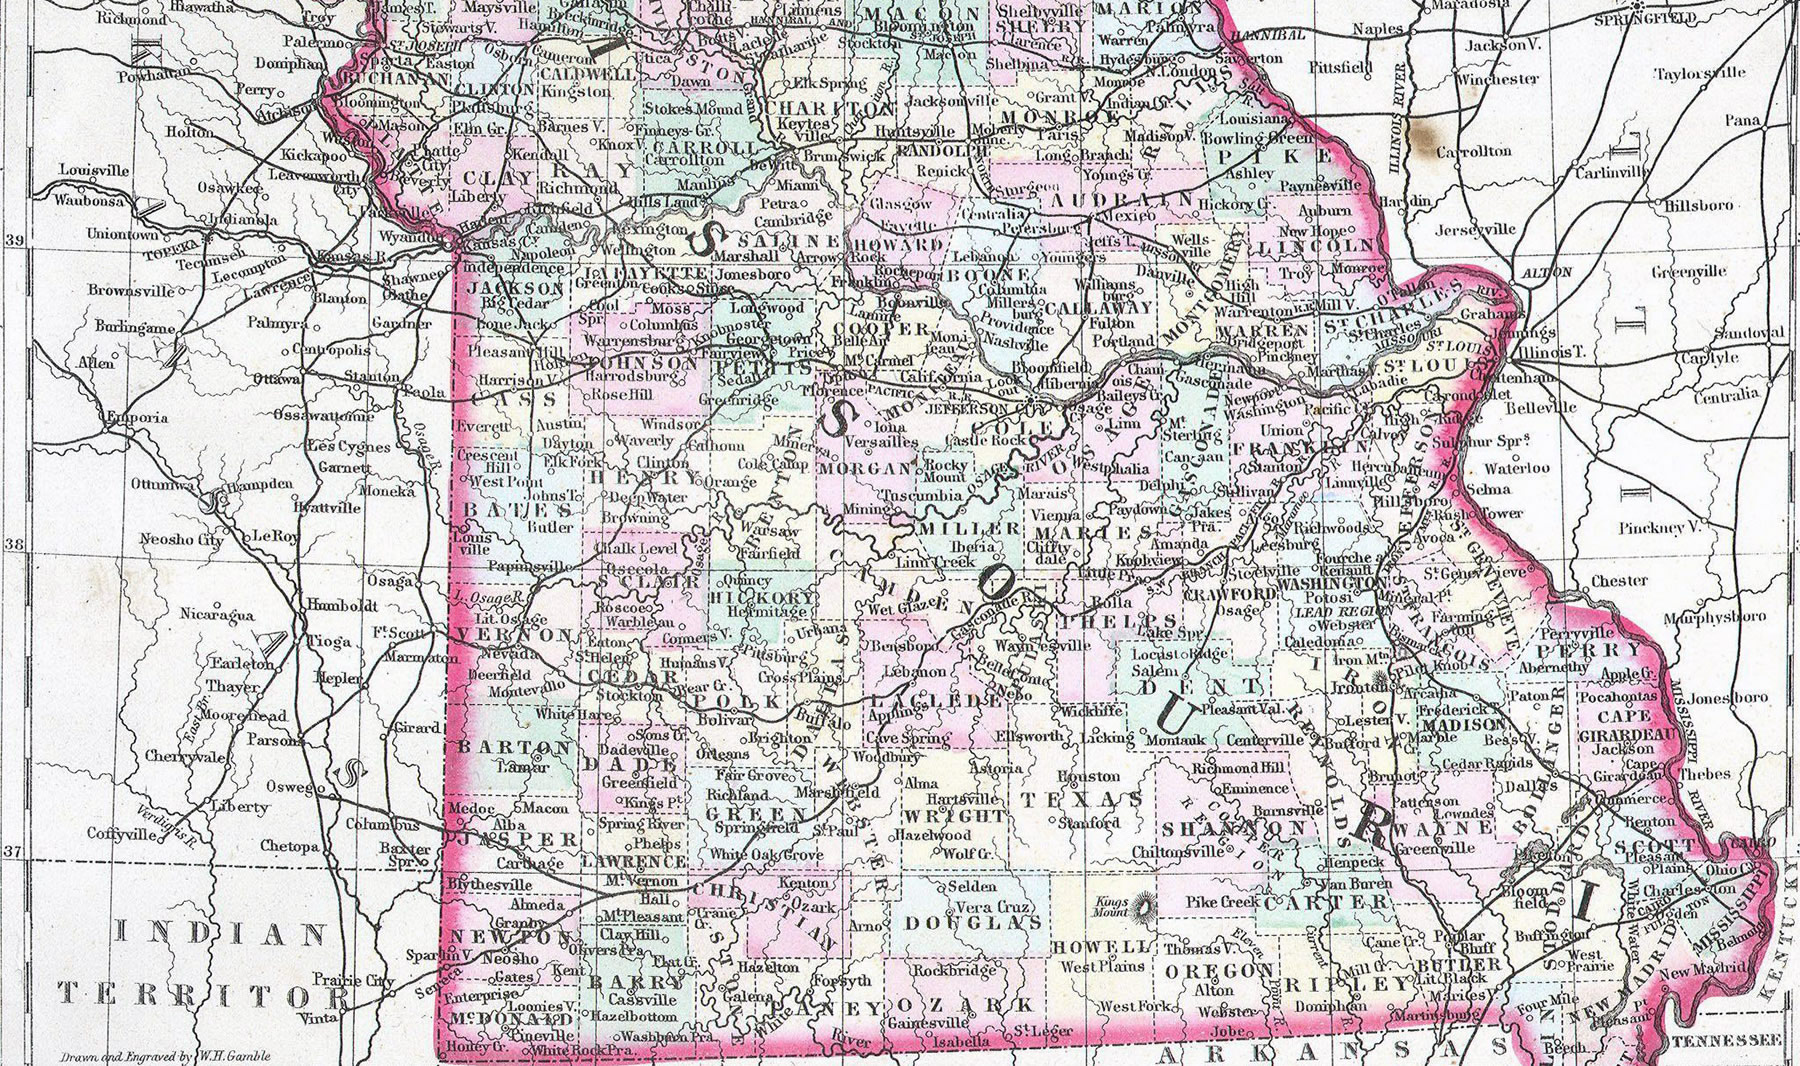 Printable Road Map Of Missouri